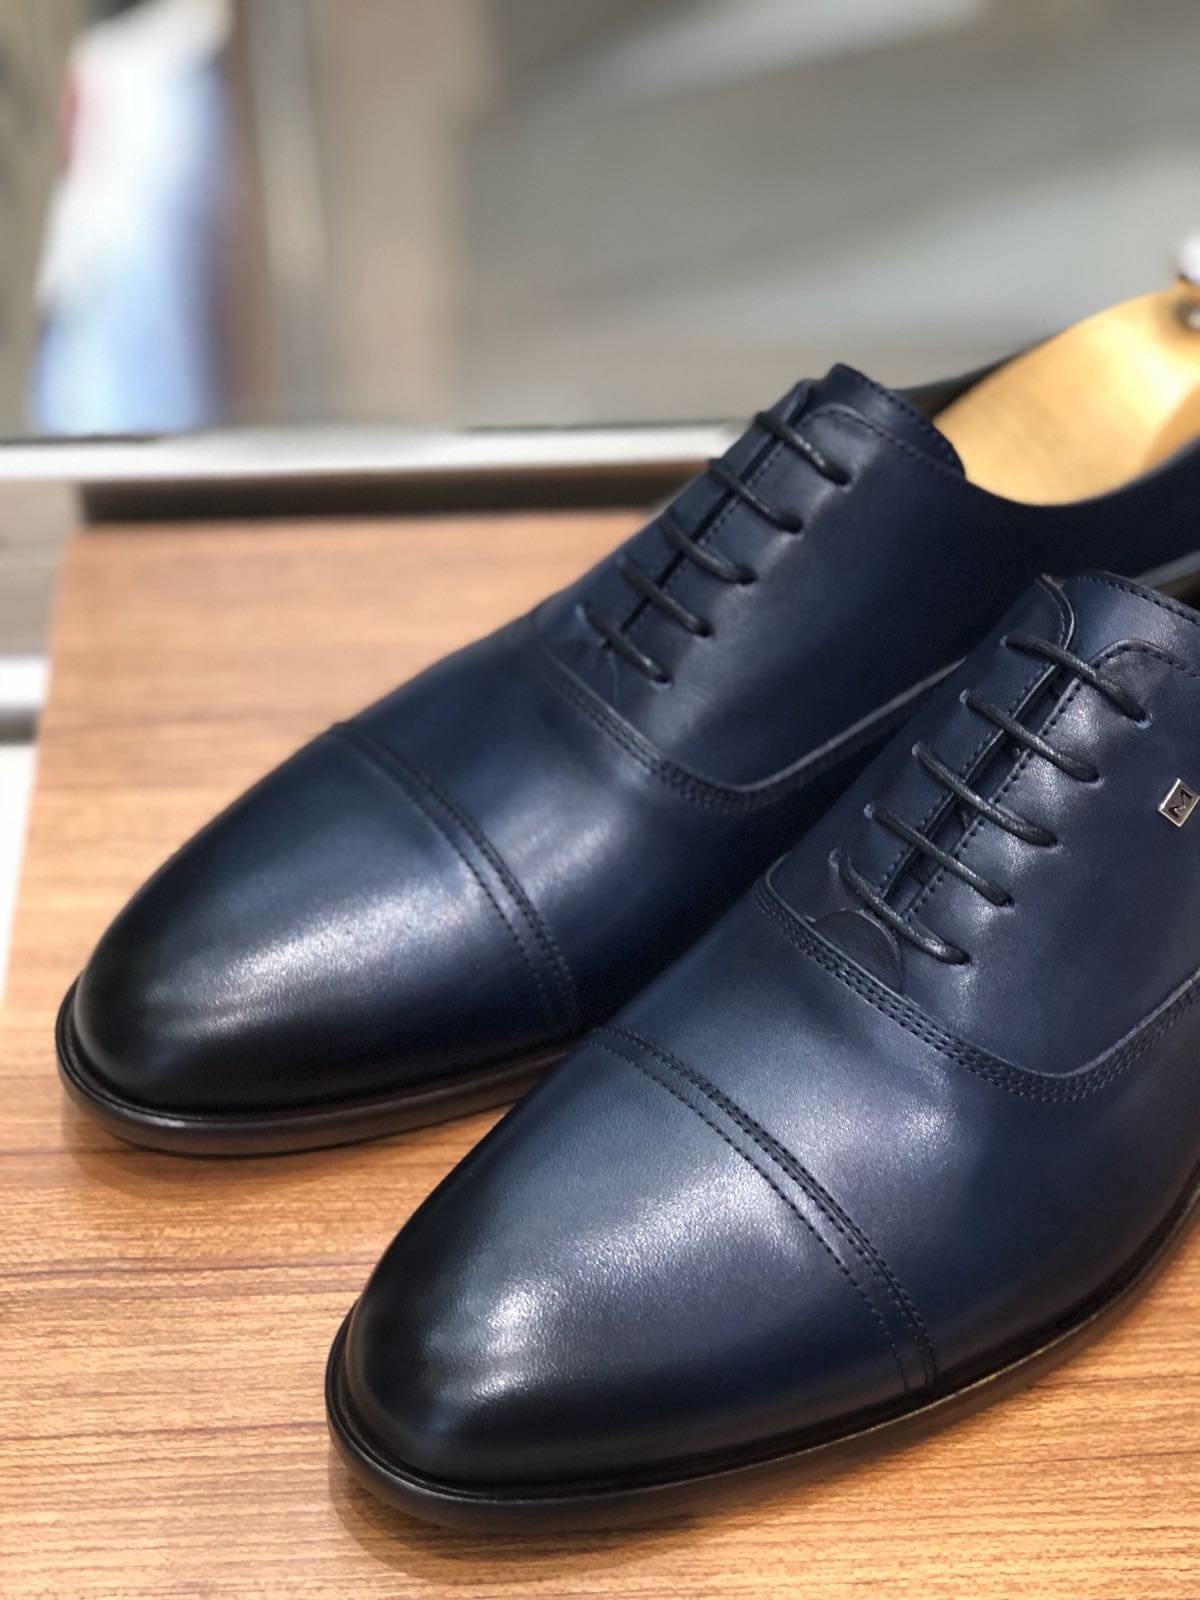 dark blue oxford shoes